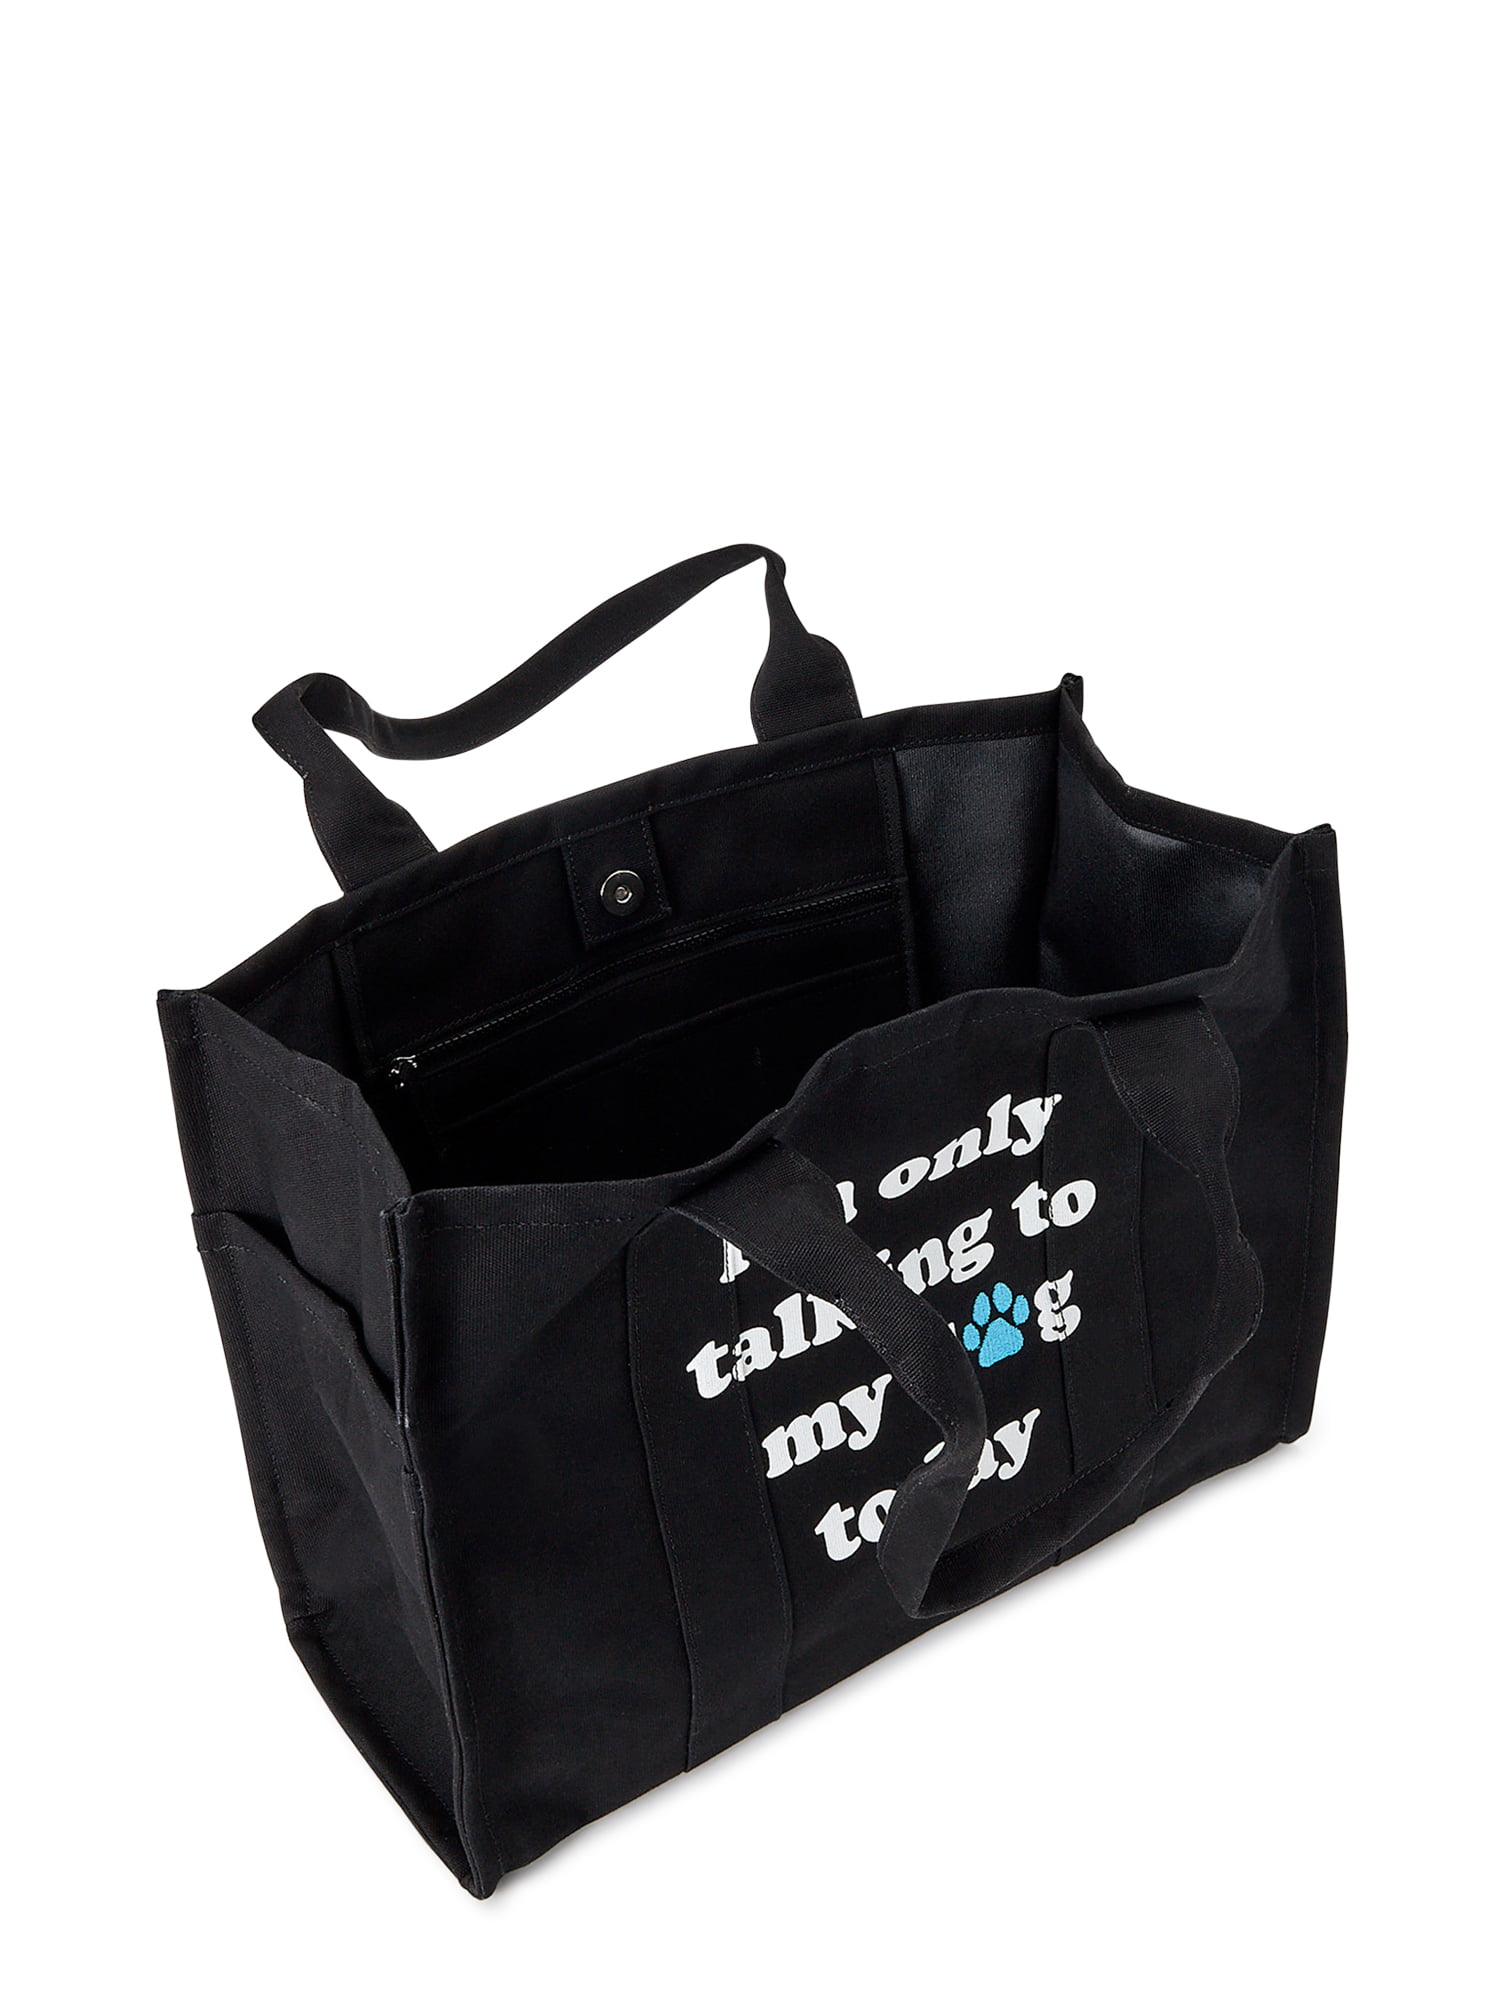 Yeti Tote Bag on Sale! YETI Crossroads Tote Bag Just $77.99 (Reg $180)!!